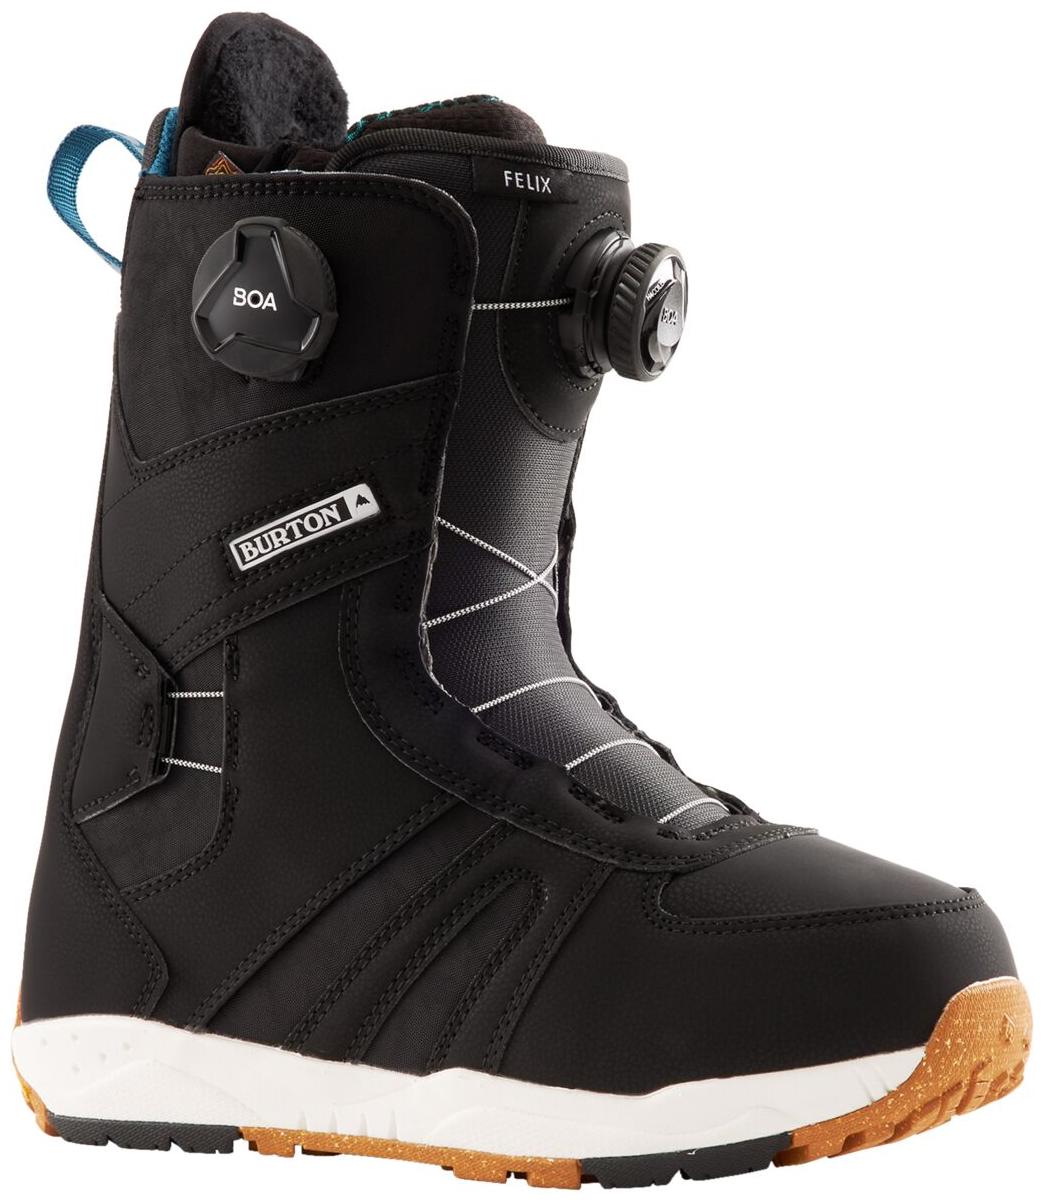 фото Ботинки для сноуборда burton felix boa 2021/2022, black, 23 см